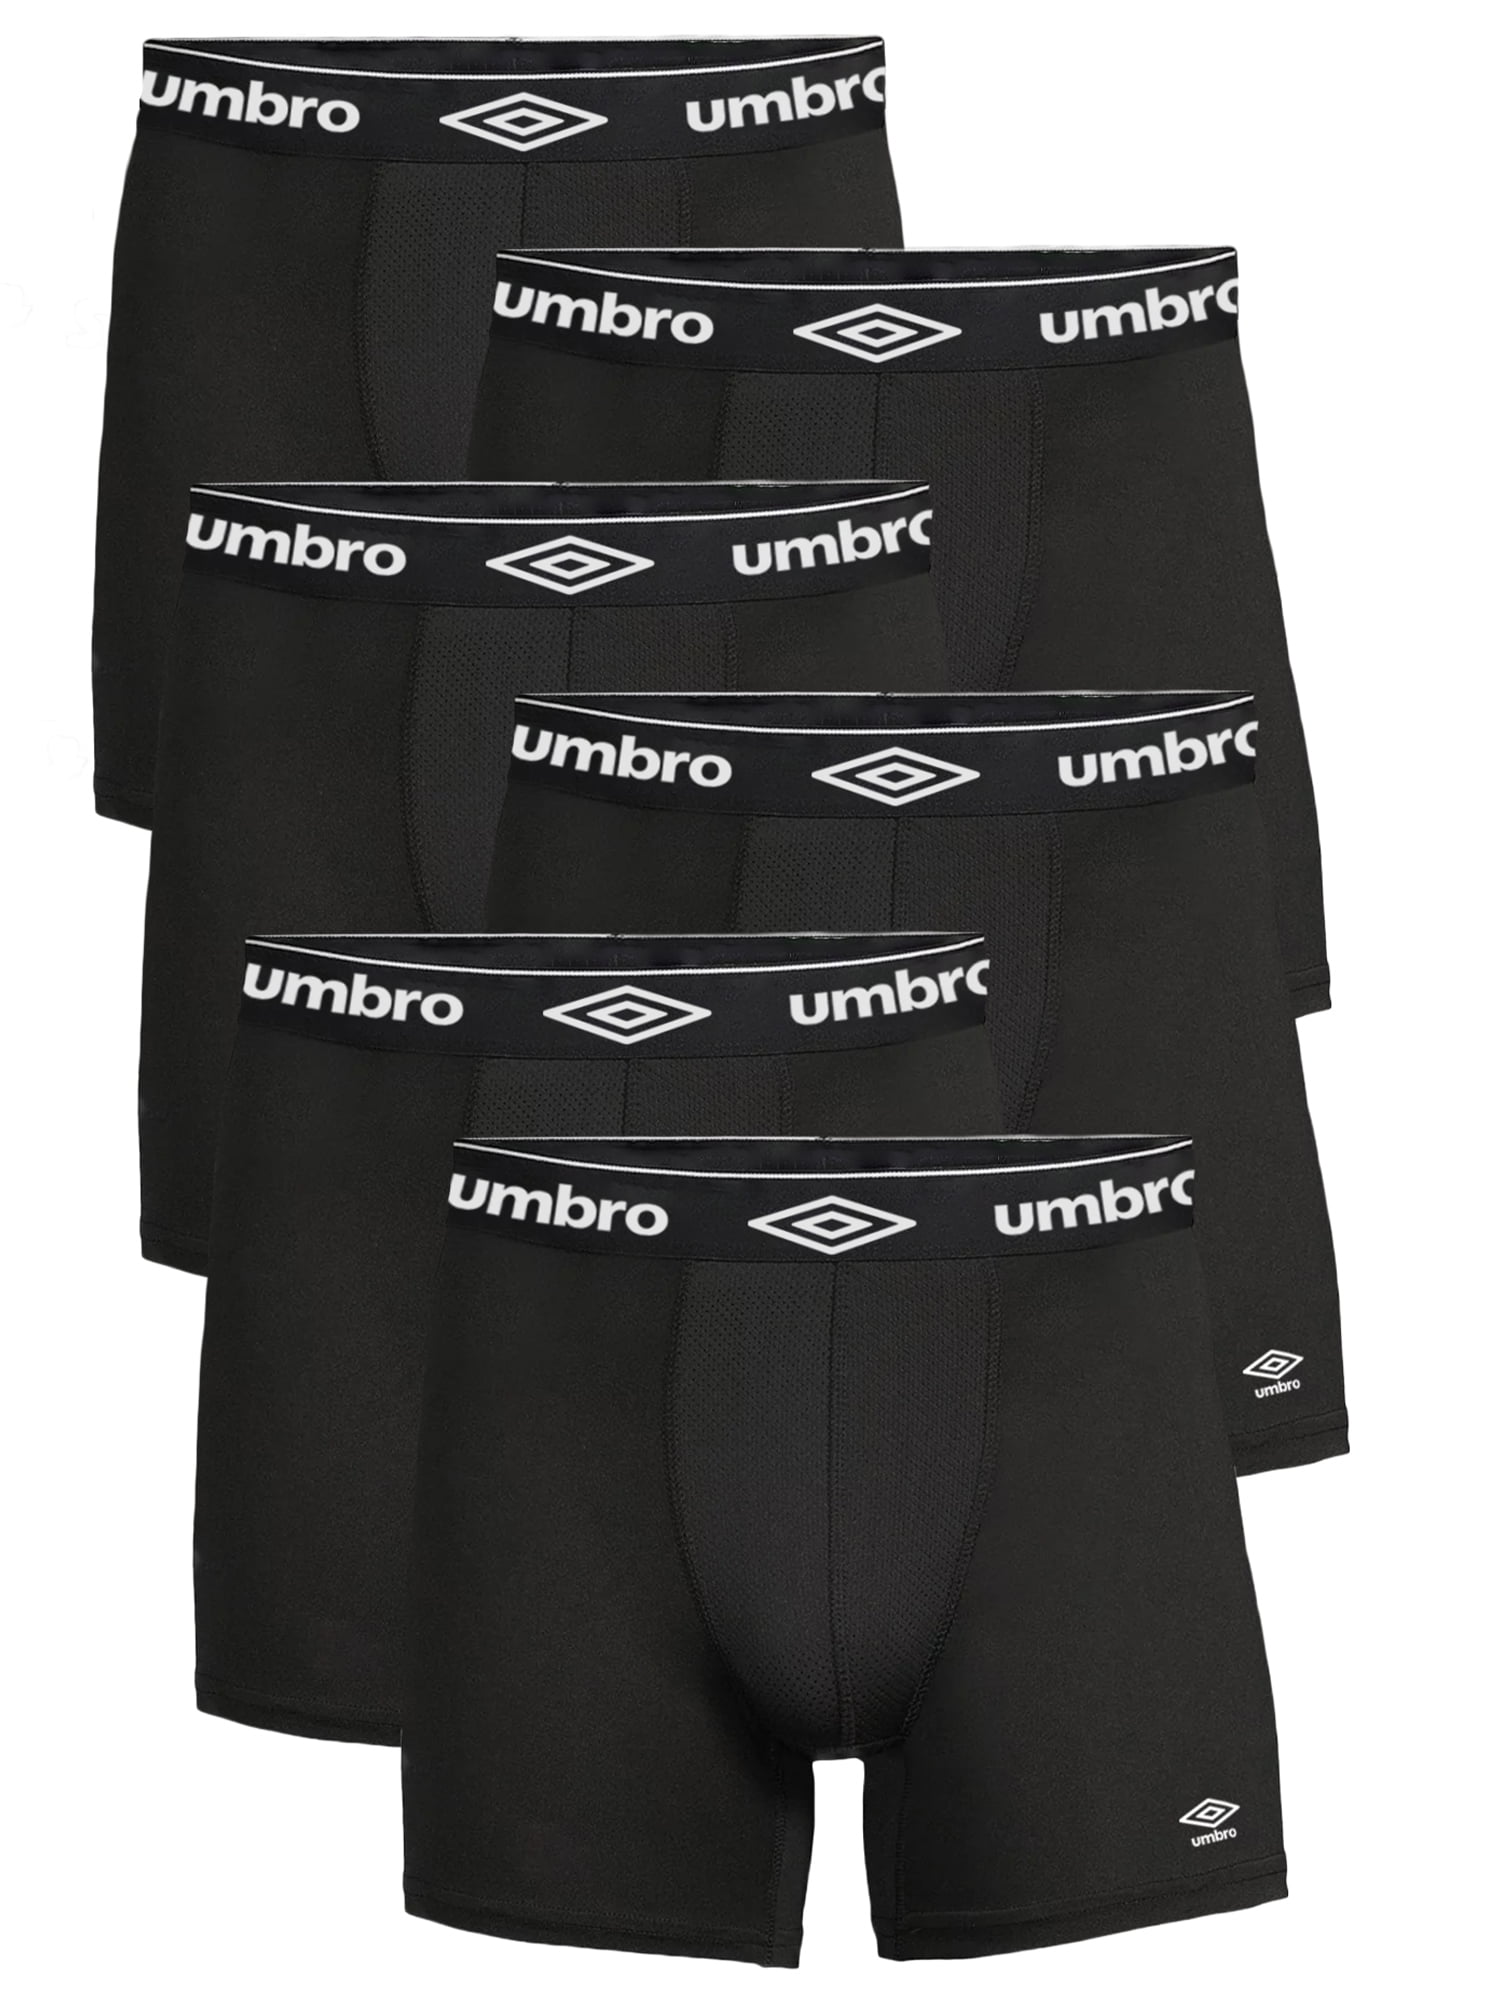 adidas Performance Boxer Brief 3-Pack Grey/Onix/Collegiate Royal Blue/Black  Underwear 'Multi' - 5152358